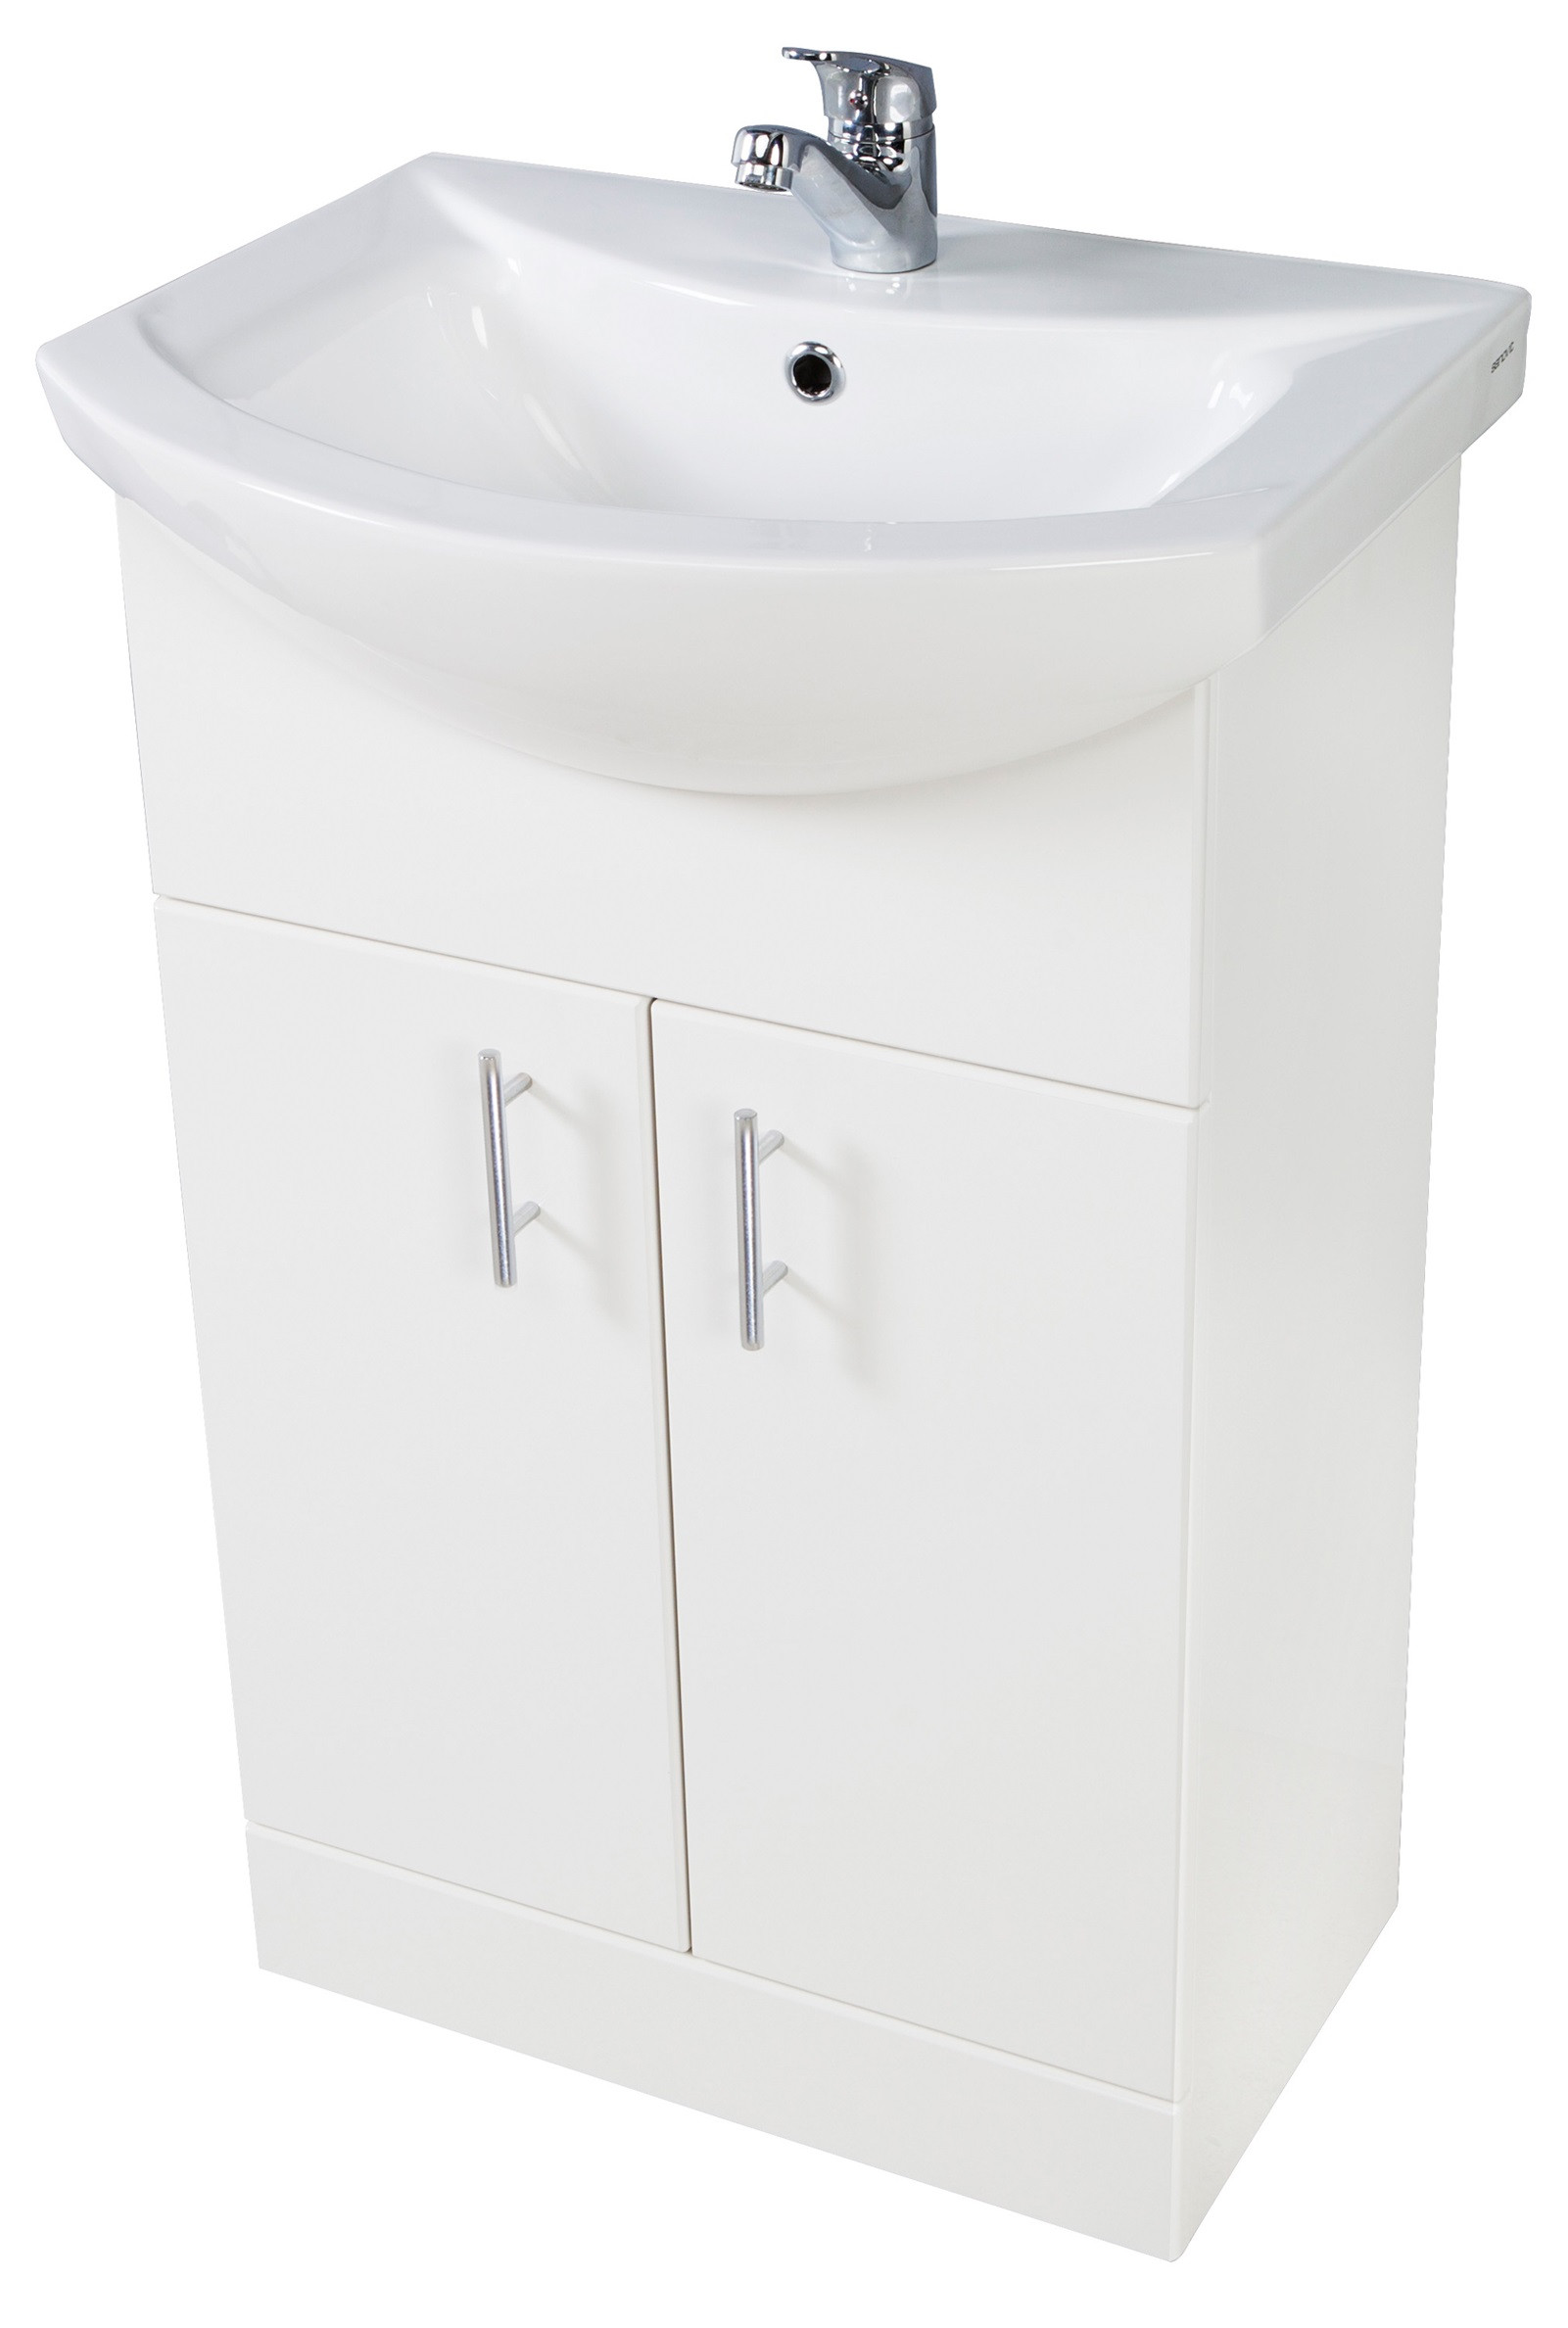 Waste Essentials 650mm Bathroom Vanity Unit & Basin Sink Gloss White Floorstanding Tap 